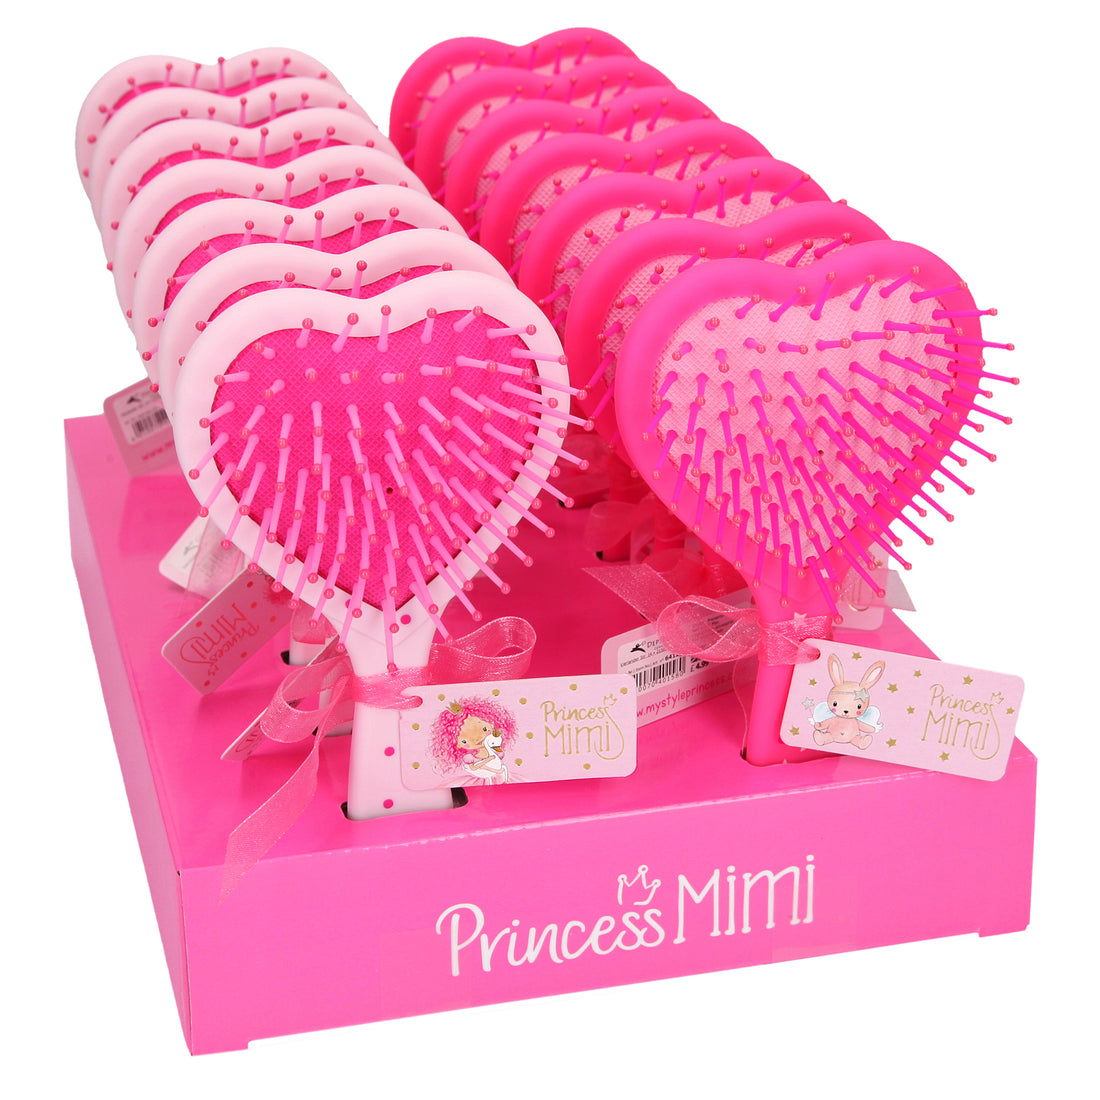 depesche-princess-mimi-hairbrush- (1)